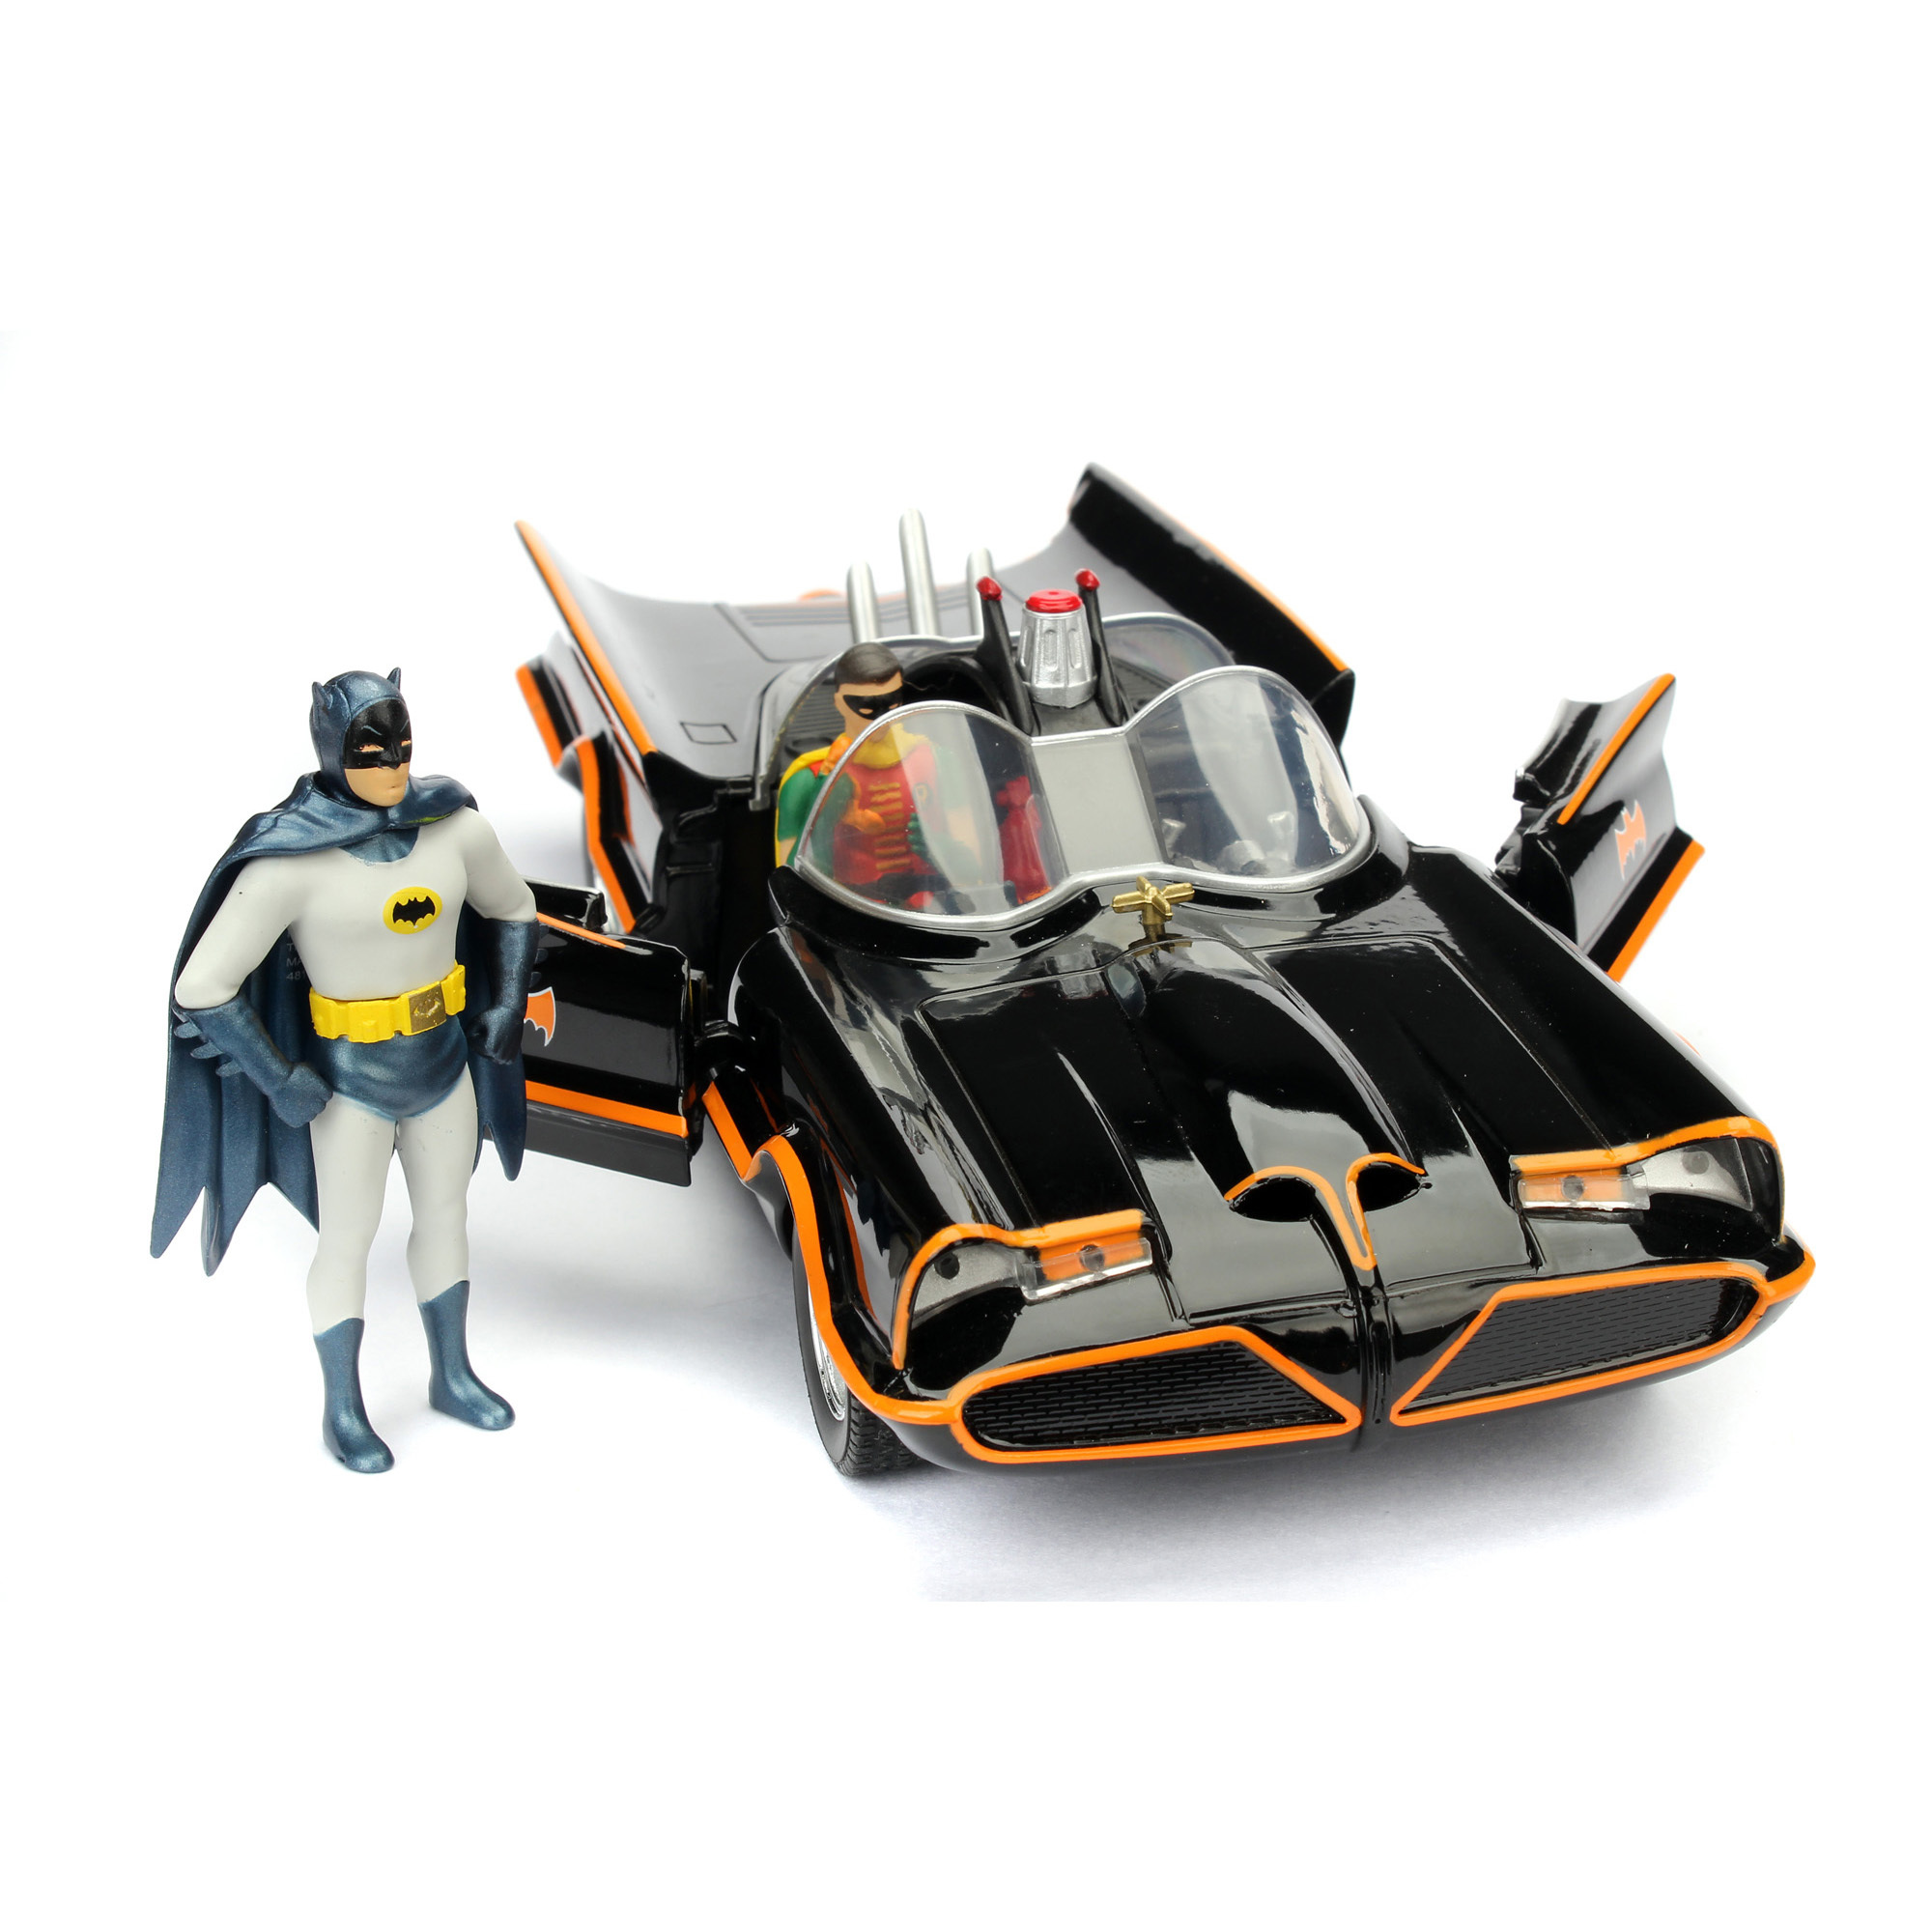 Batmobile classic 1966 scala 1:24 + personaggio batman - DC Comics, Jada